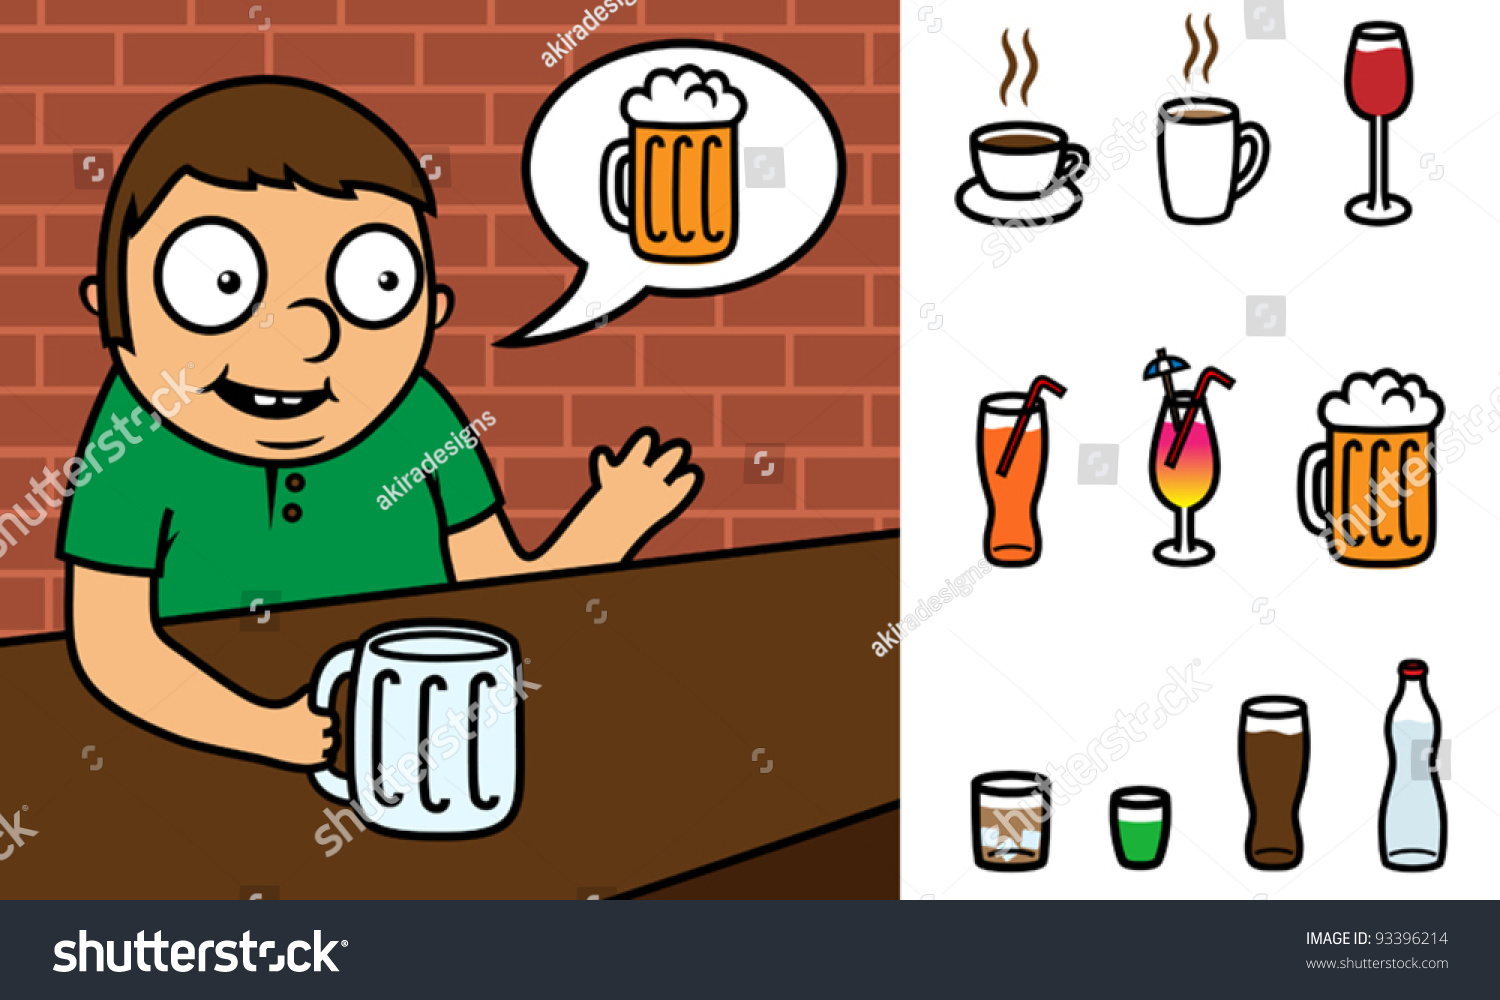 Order a drink. Ordering Drink cartoon at Bar.